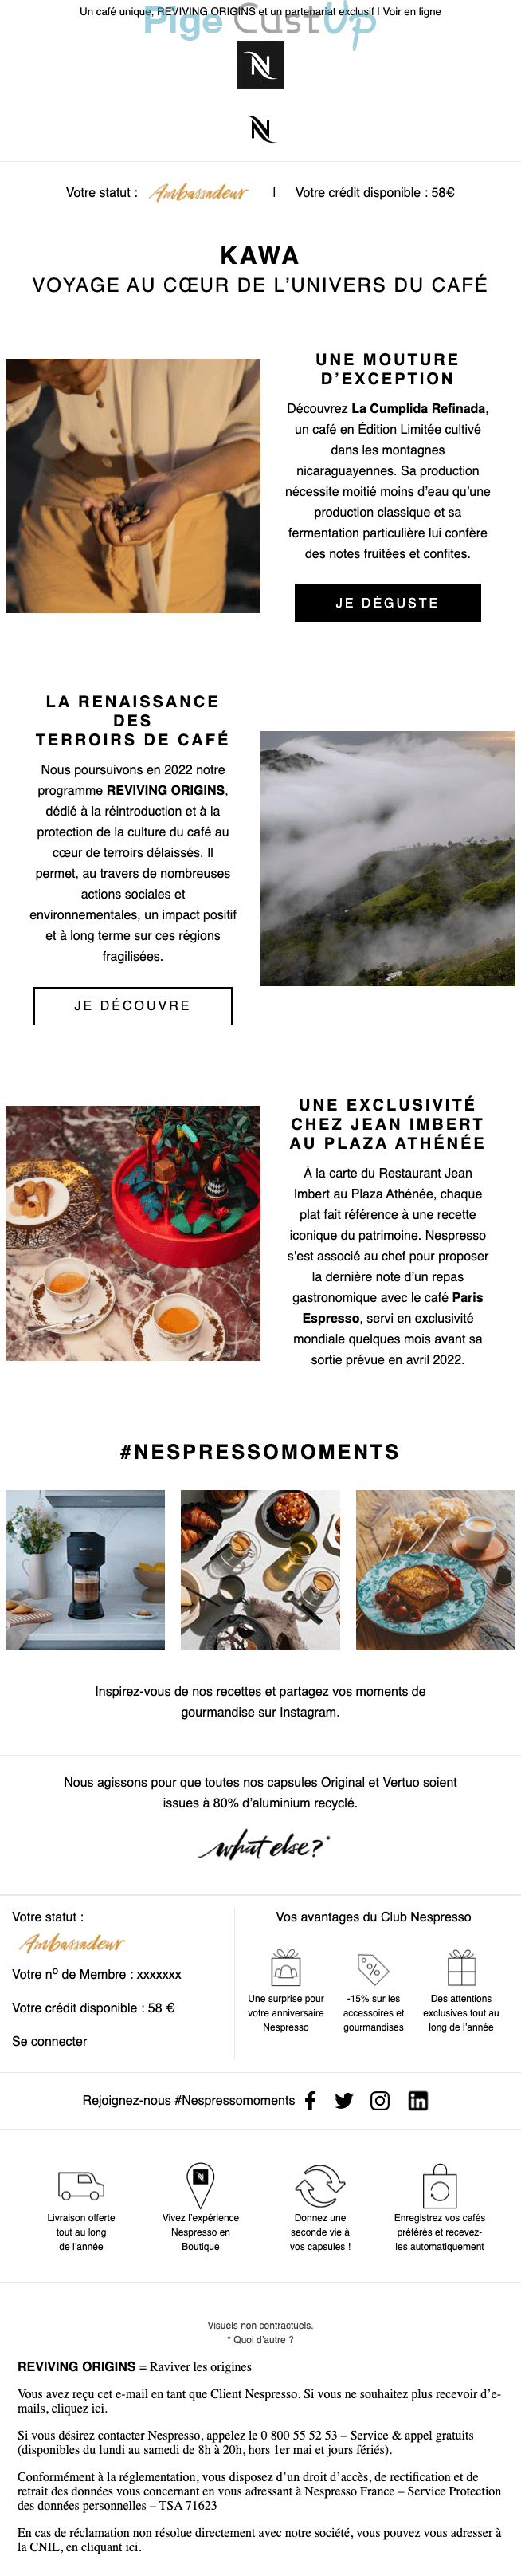 Exemple de Type de media   - Nespresso - Marketing relationnel - Newsletter